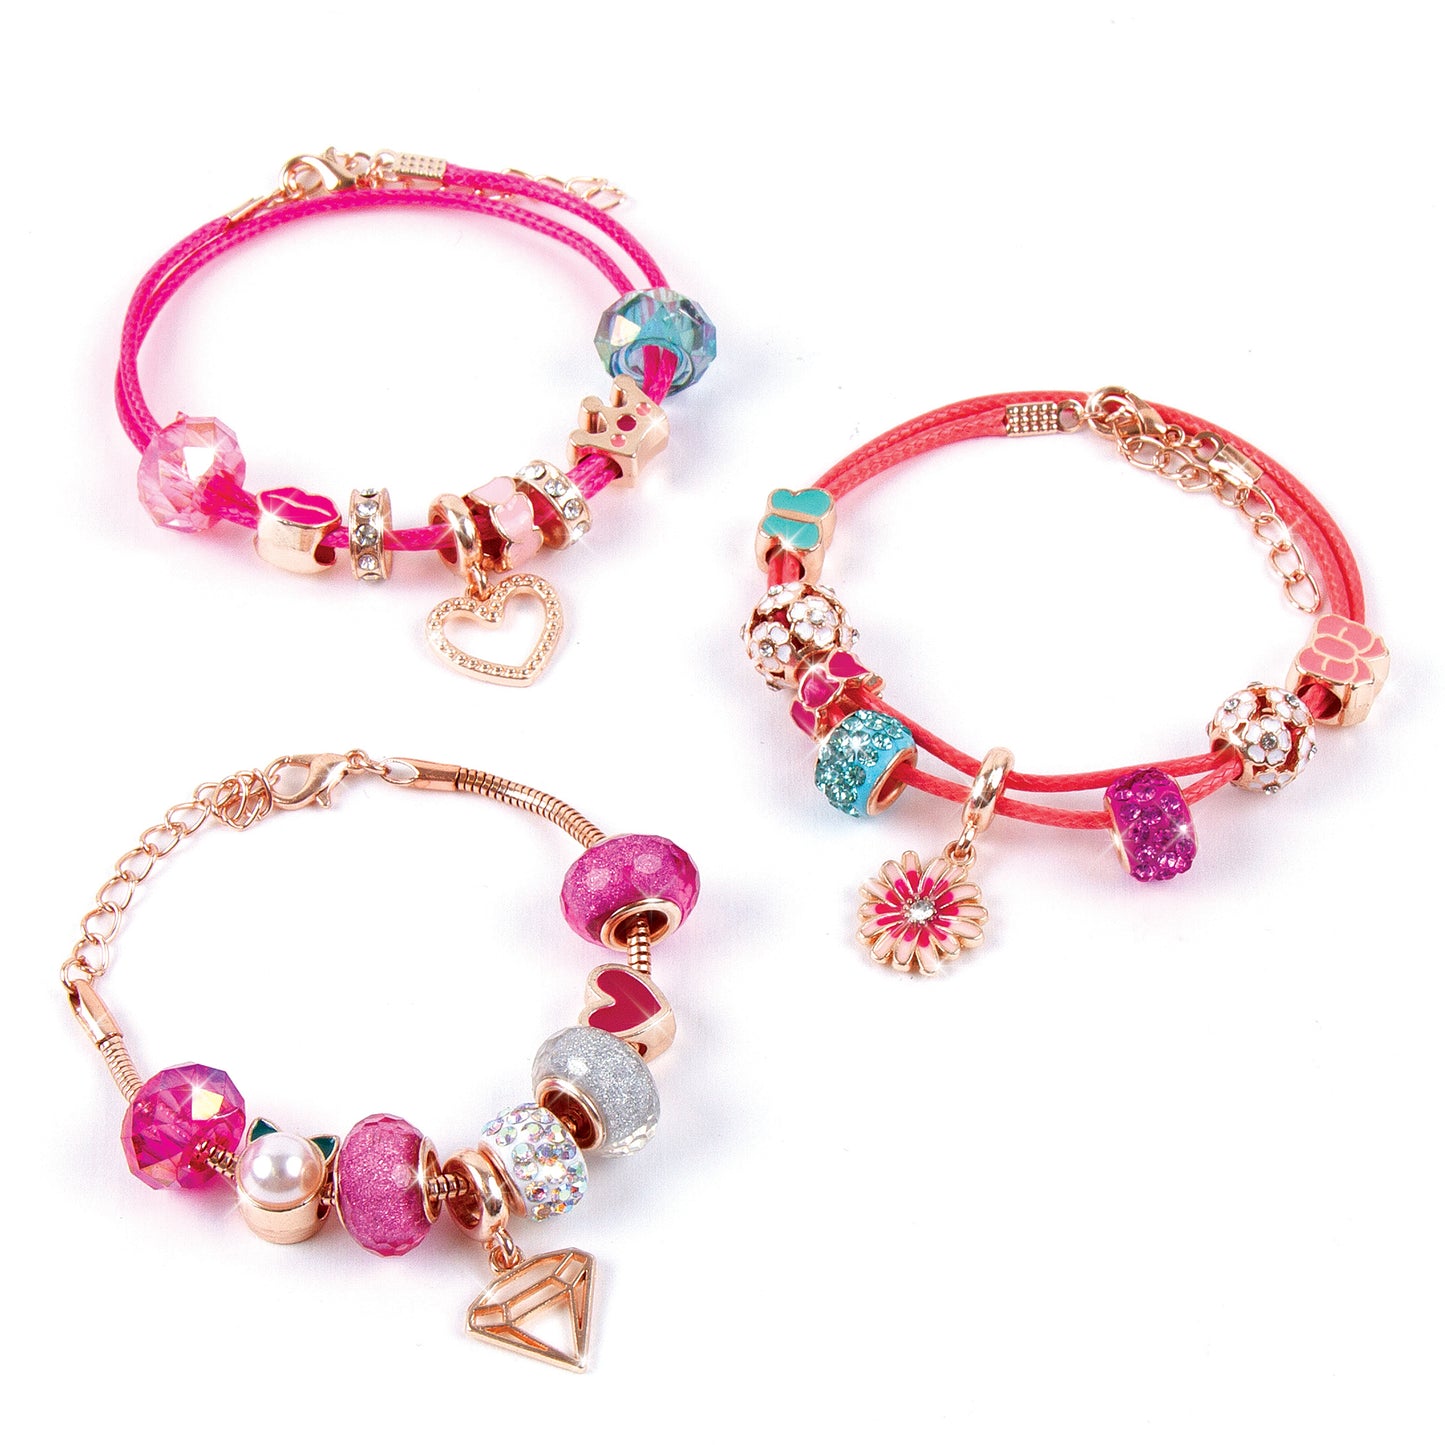 Halo Charms Bracelets: Think Pink